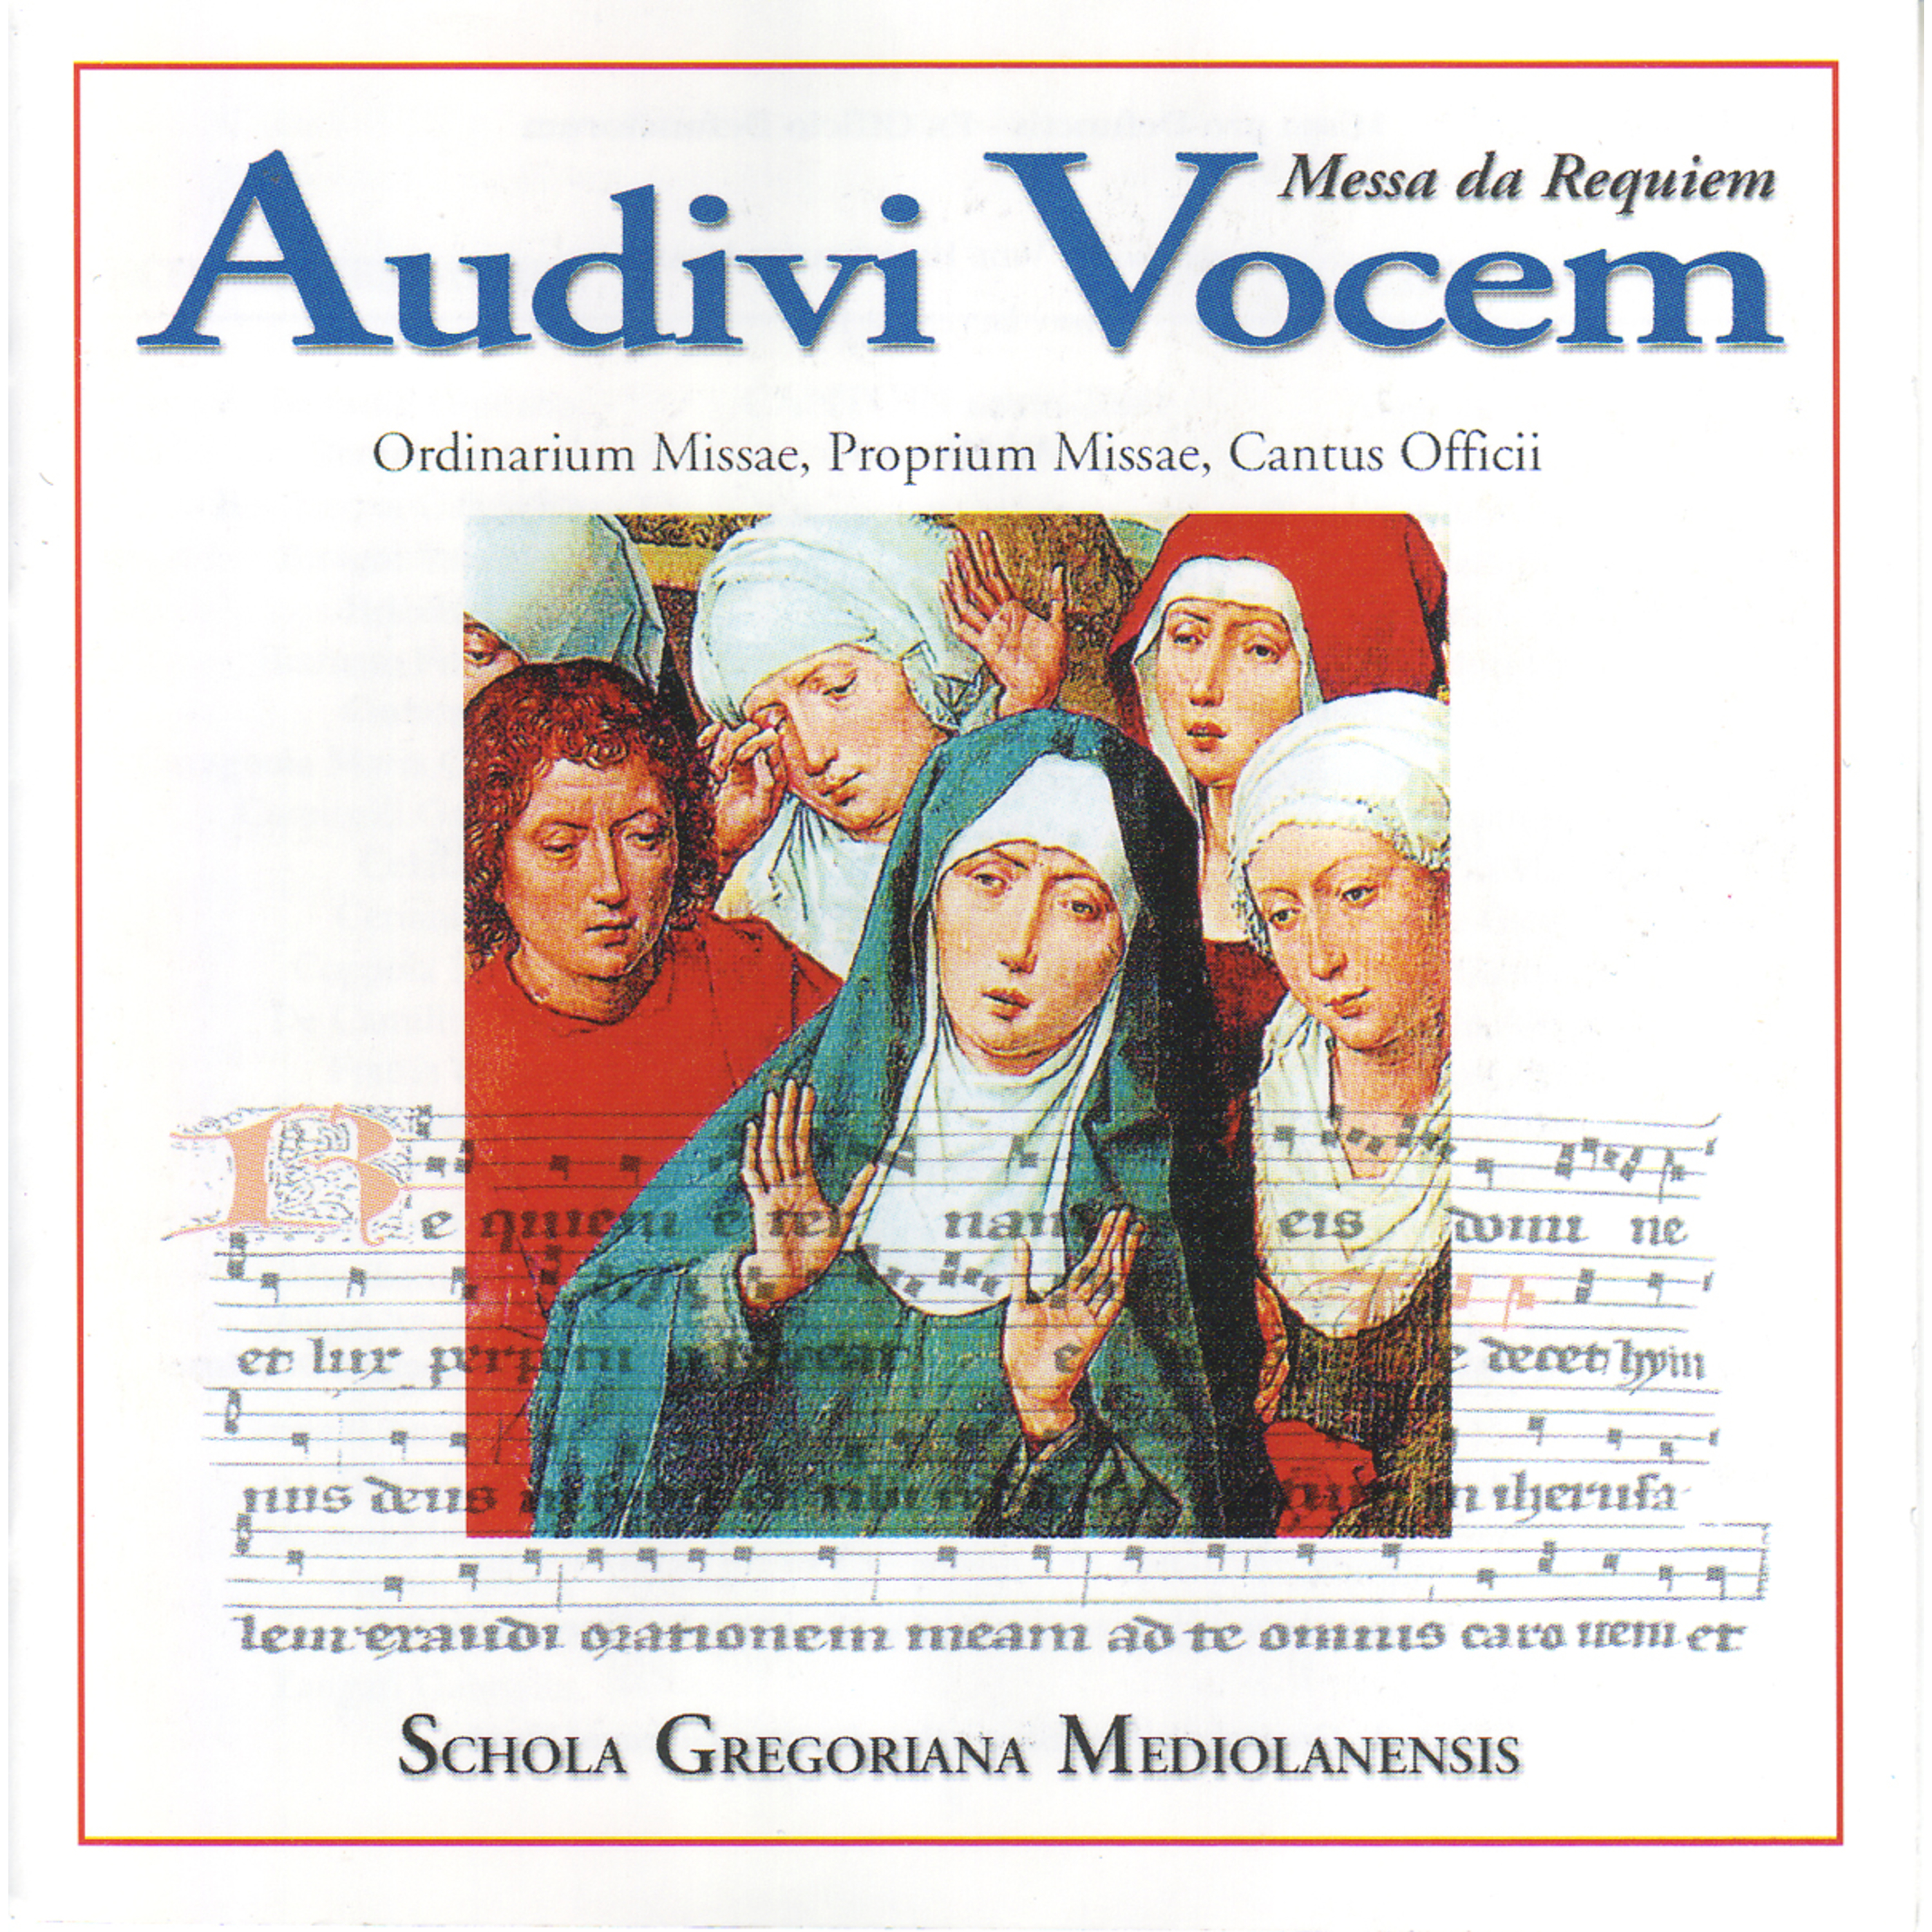 Messa da Requiem: Chorus angelorum